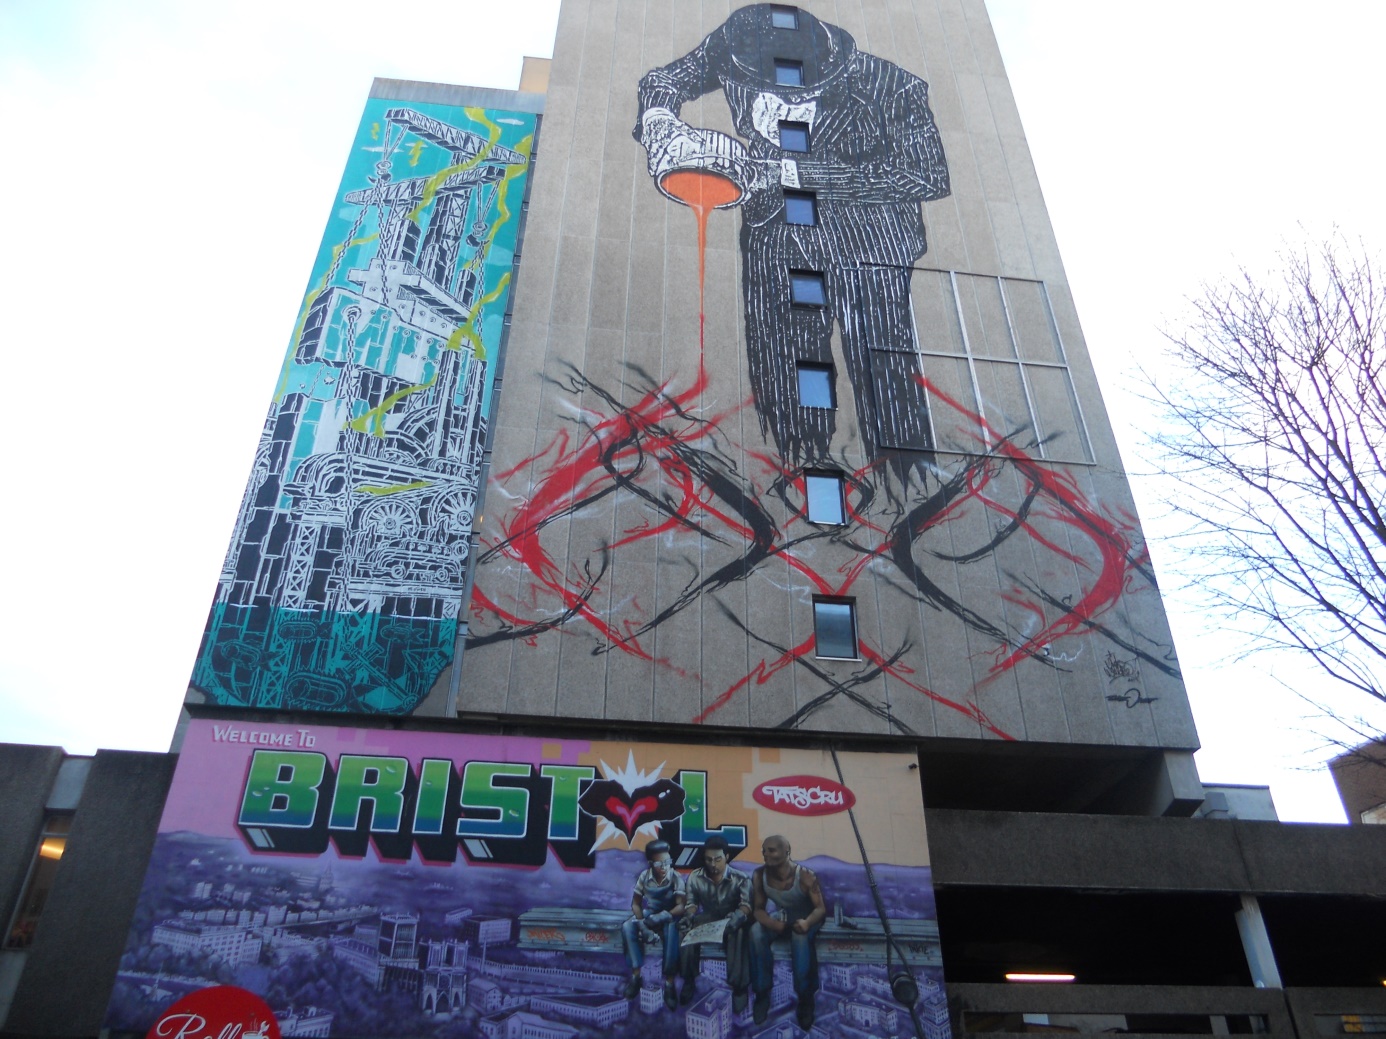 Follow Augustin Pizon on his graffiti tour! - EC Bristol Blog